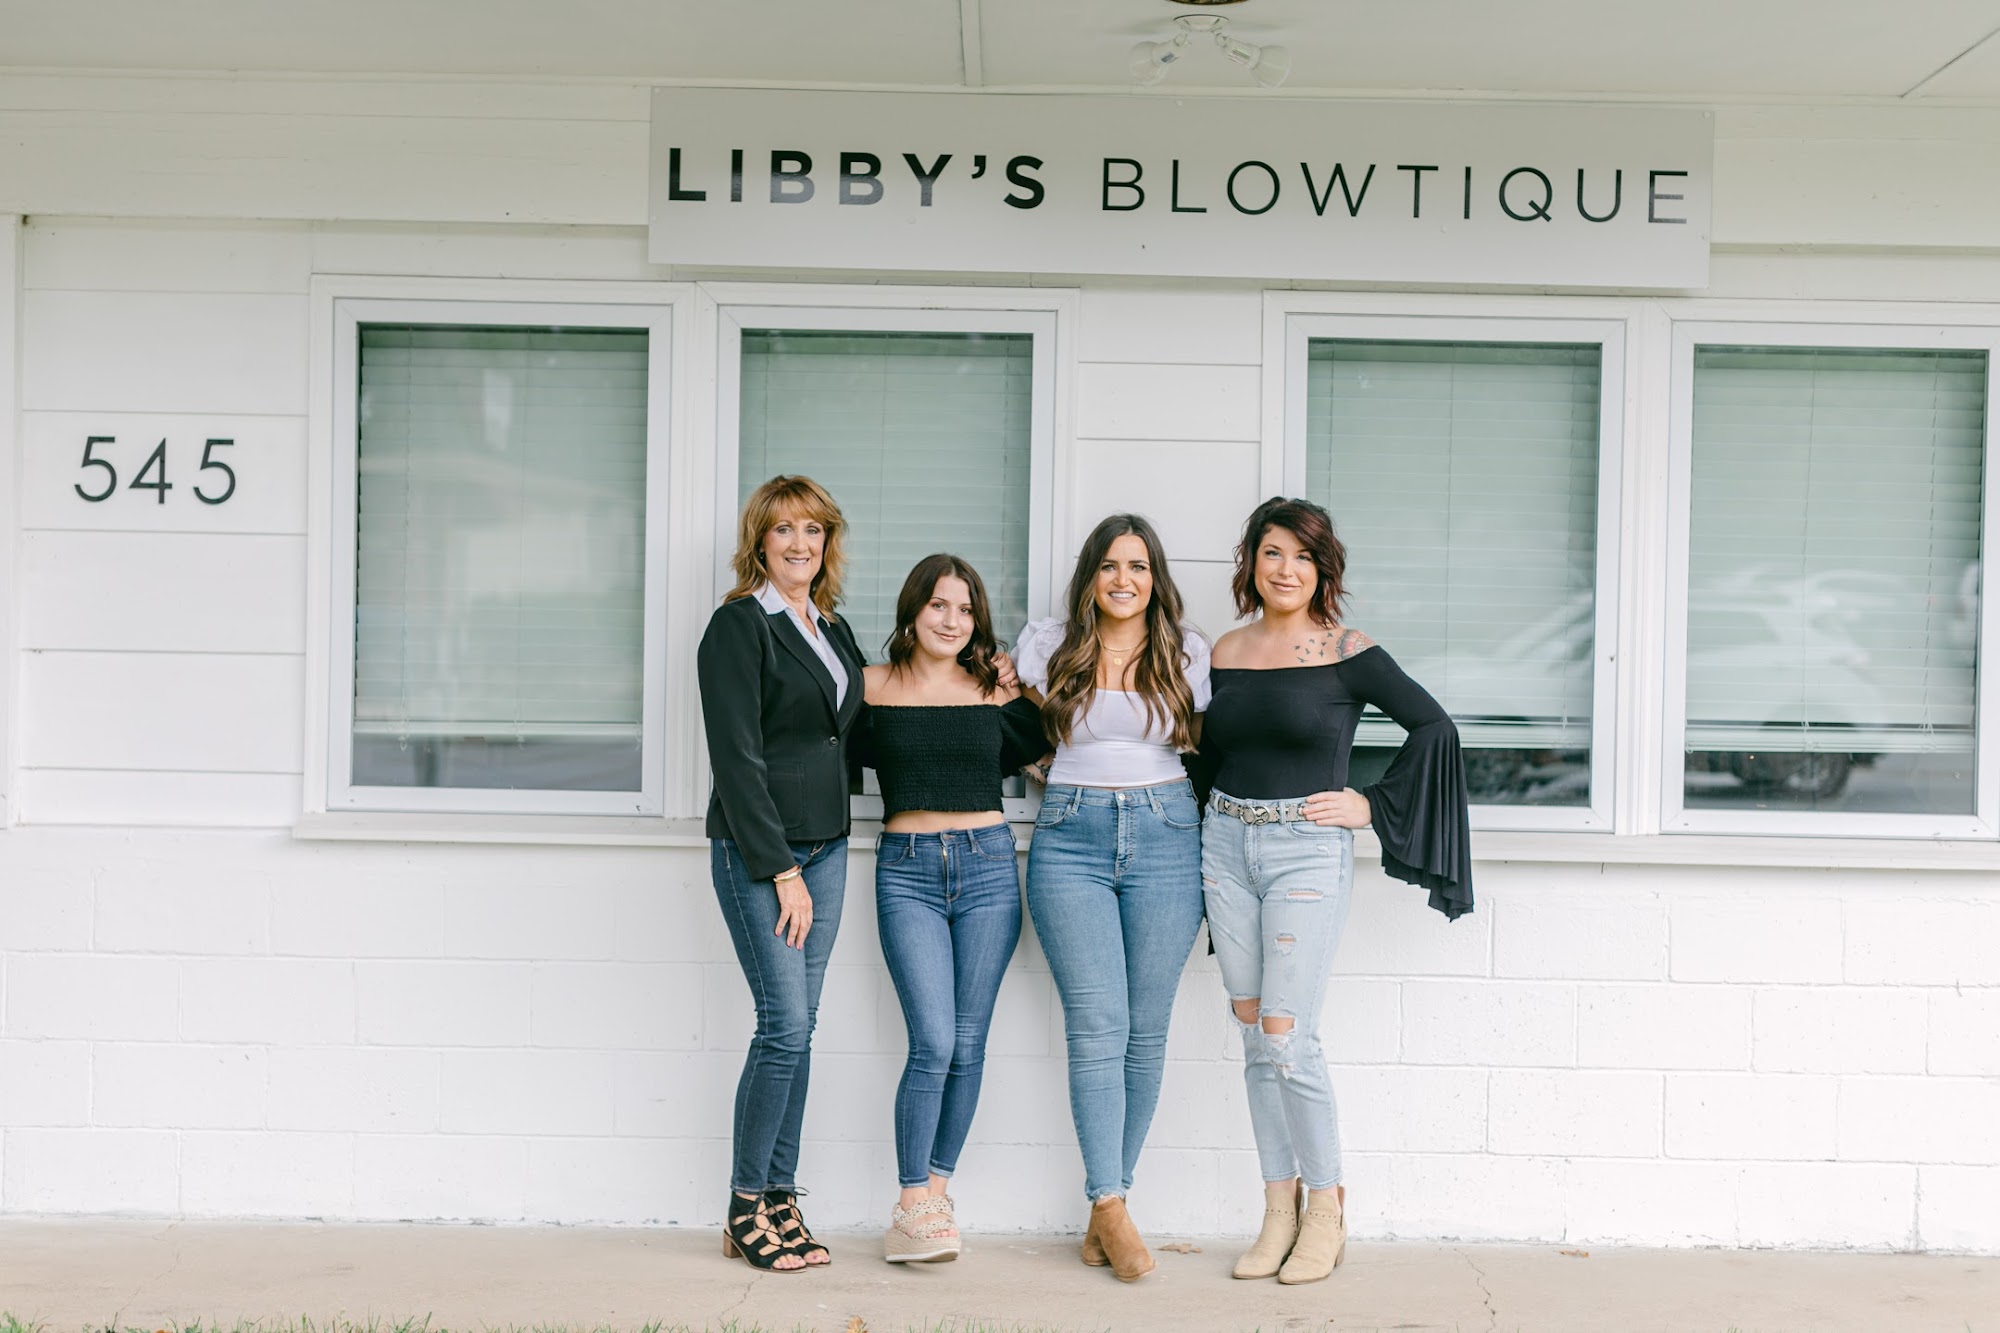 Libby's Blowtique - A Blow Dry Bar